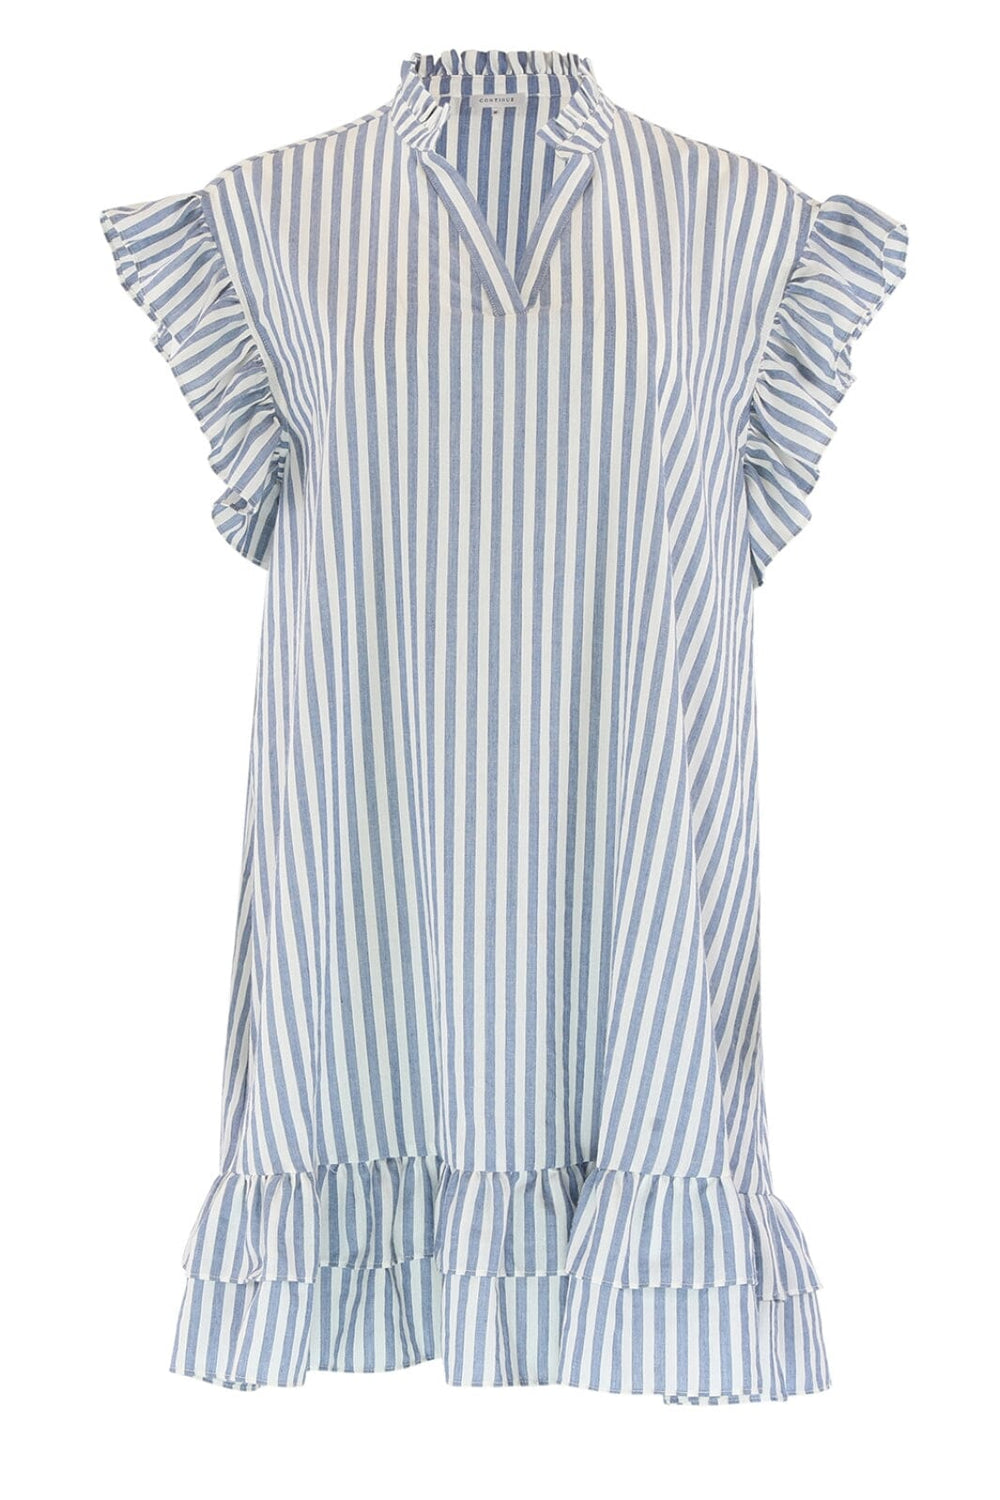 Continue - Lee Stripe Dress - 026 Blue/White Kjoler 